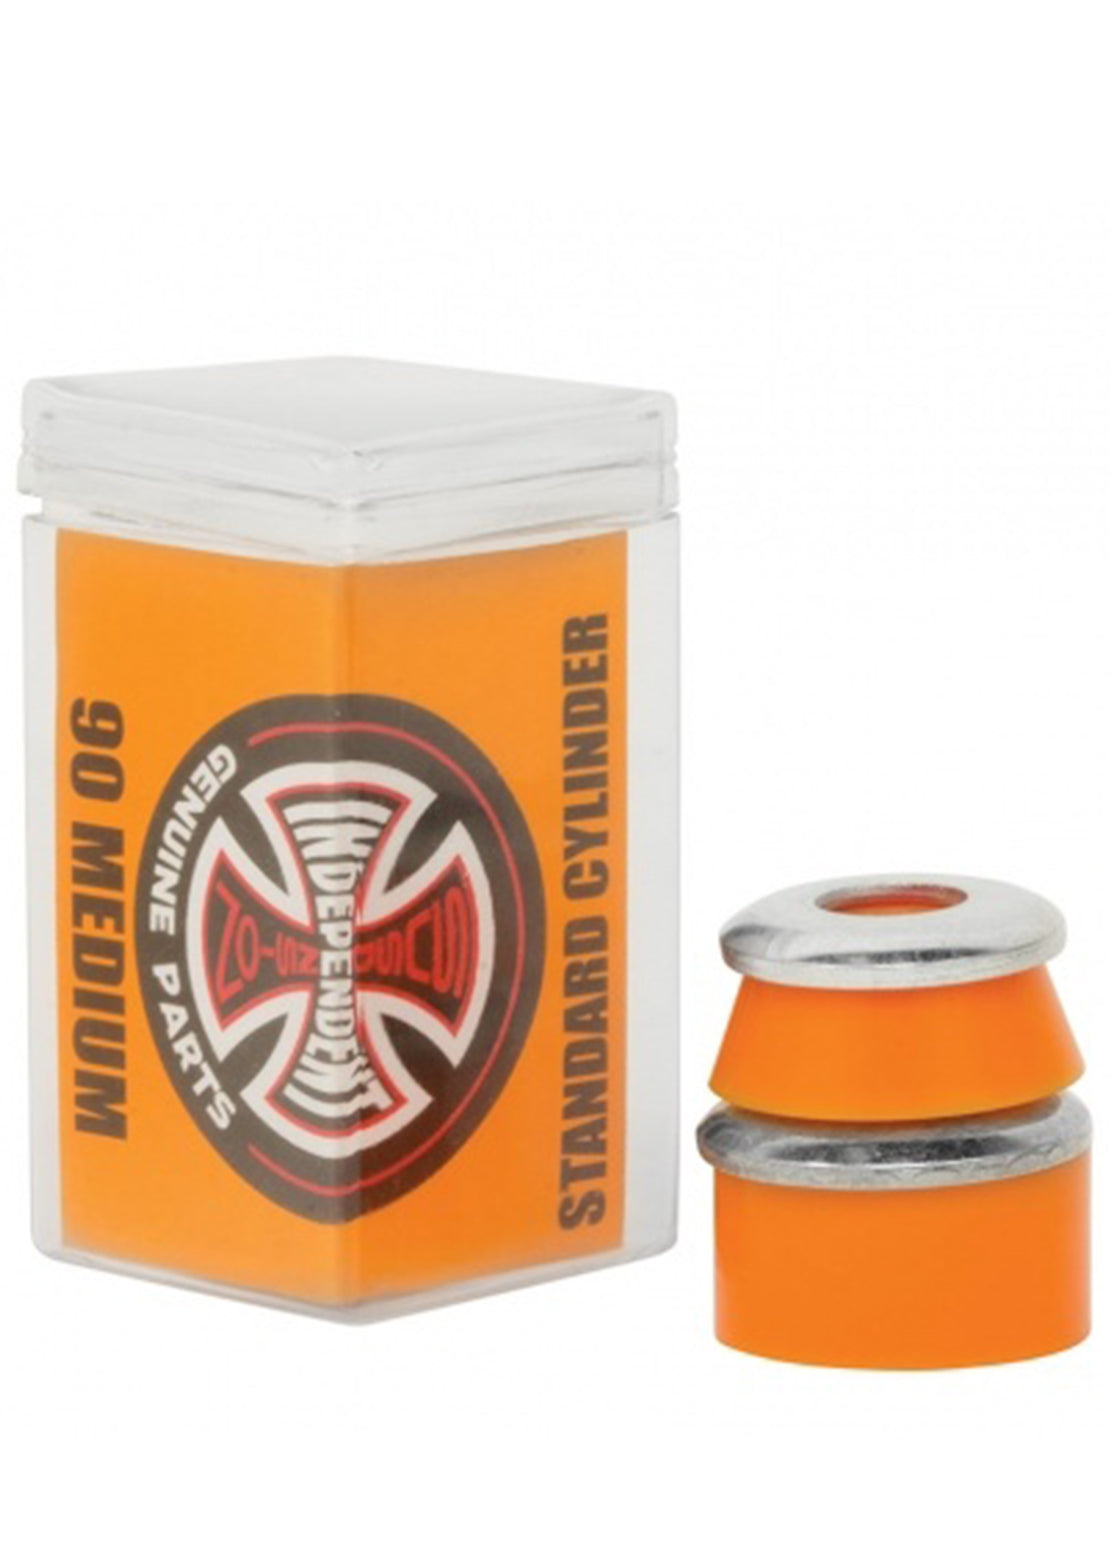 Independent Standard Bushings Orange - Cylinder - Medium - 90a